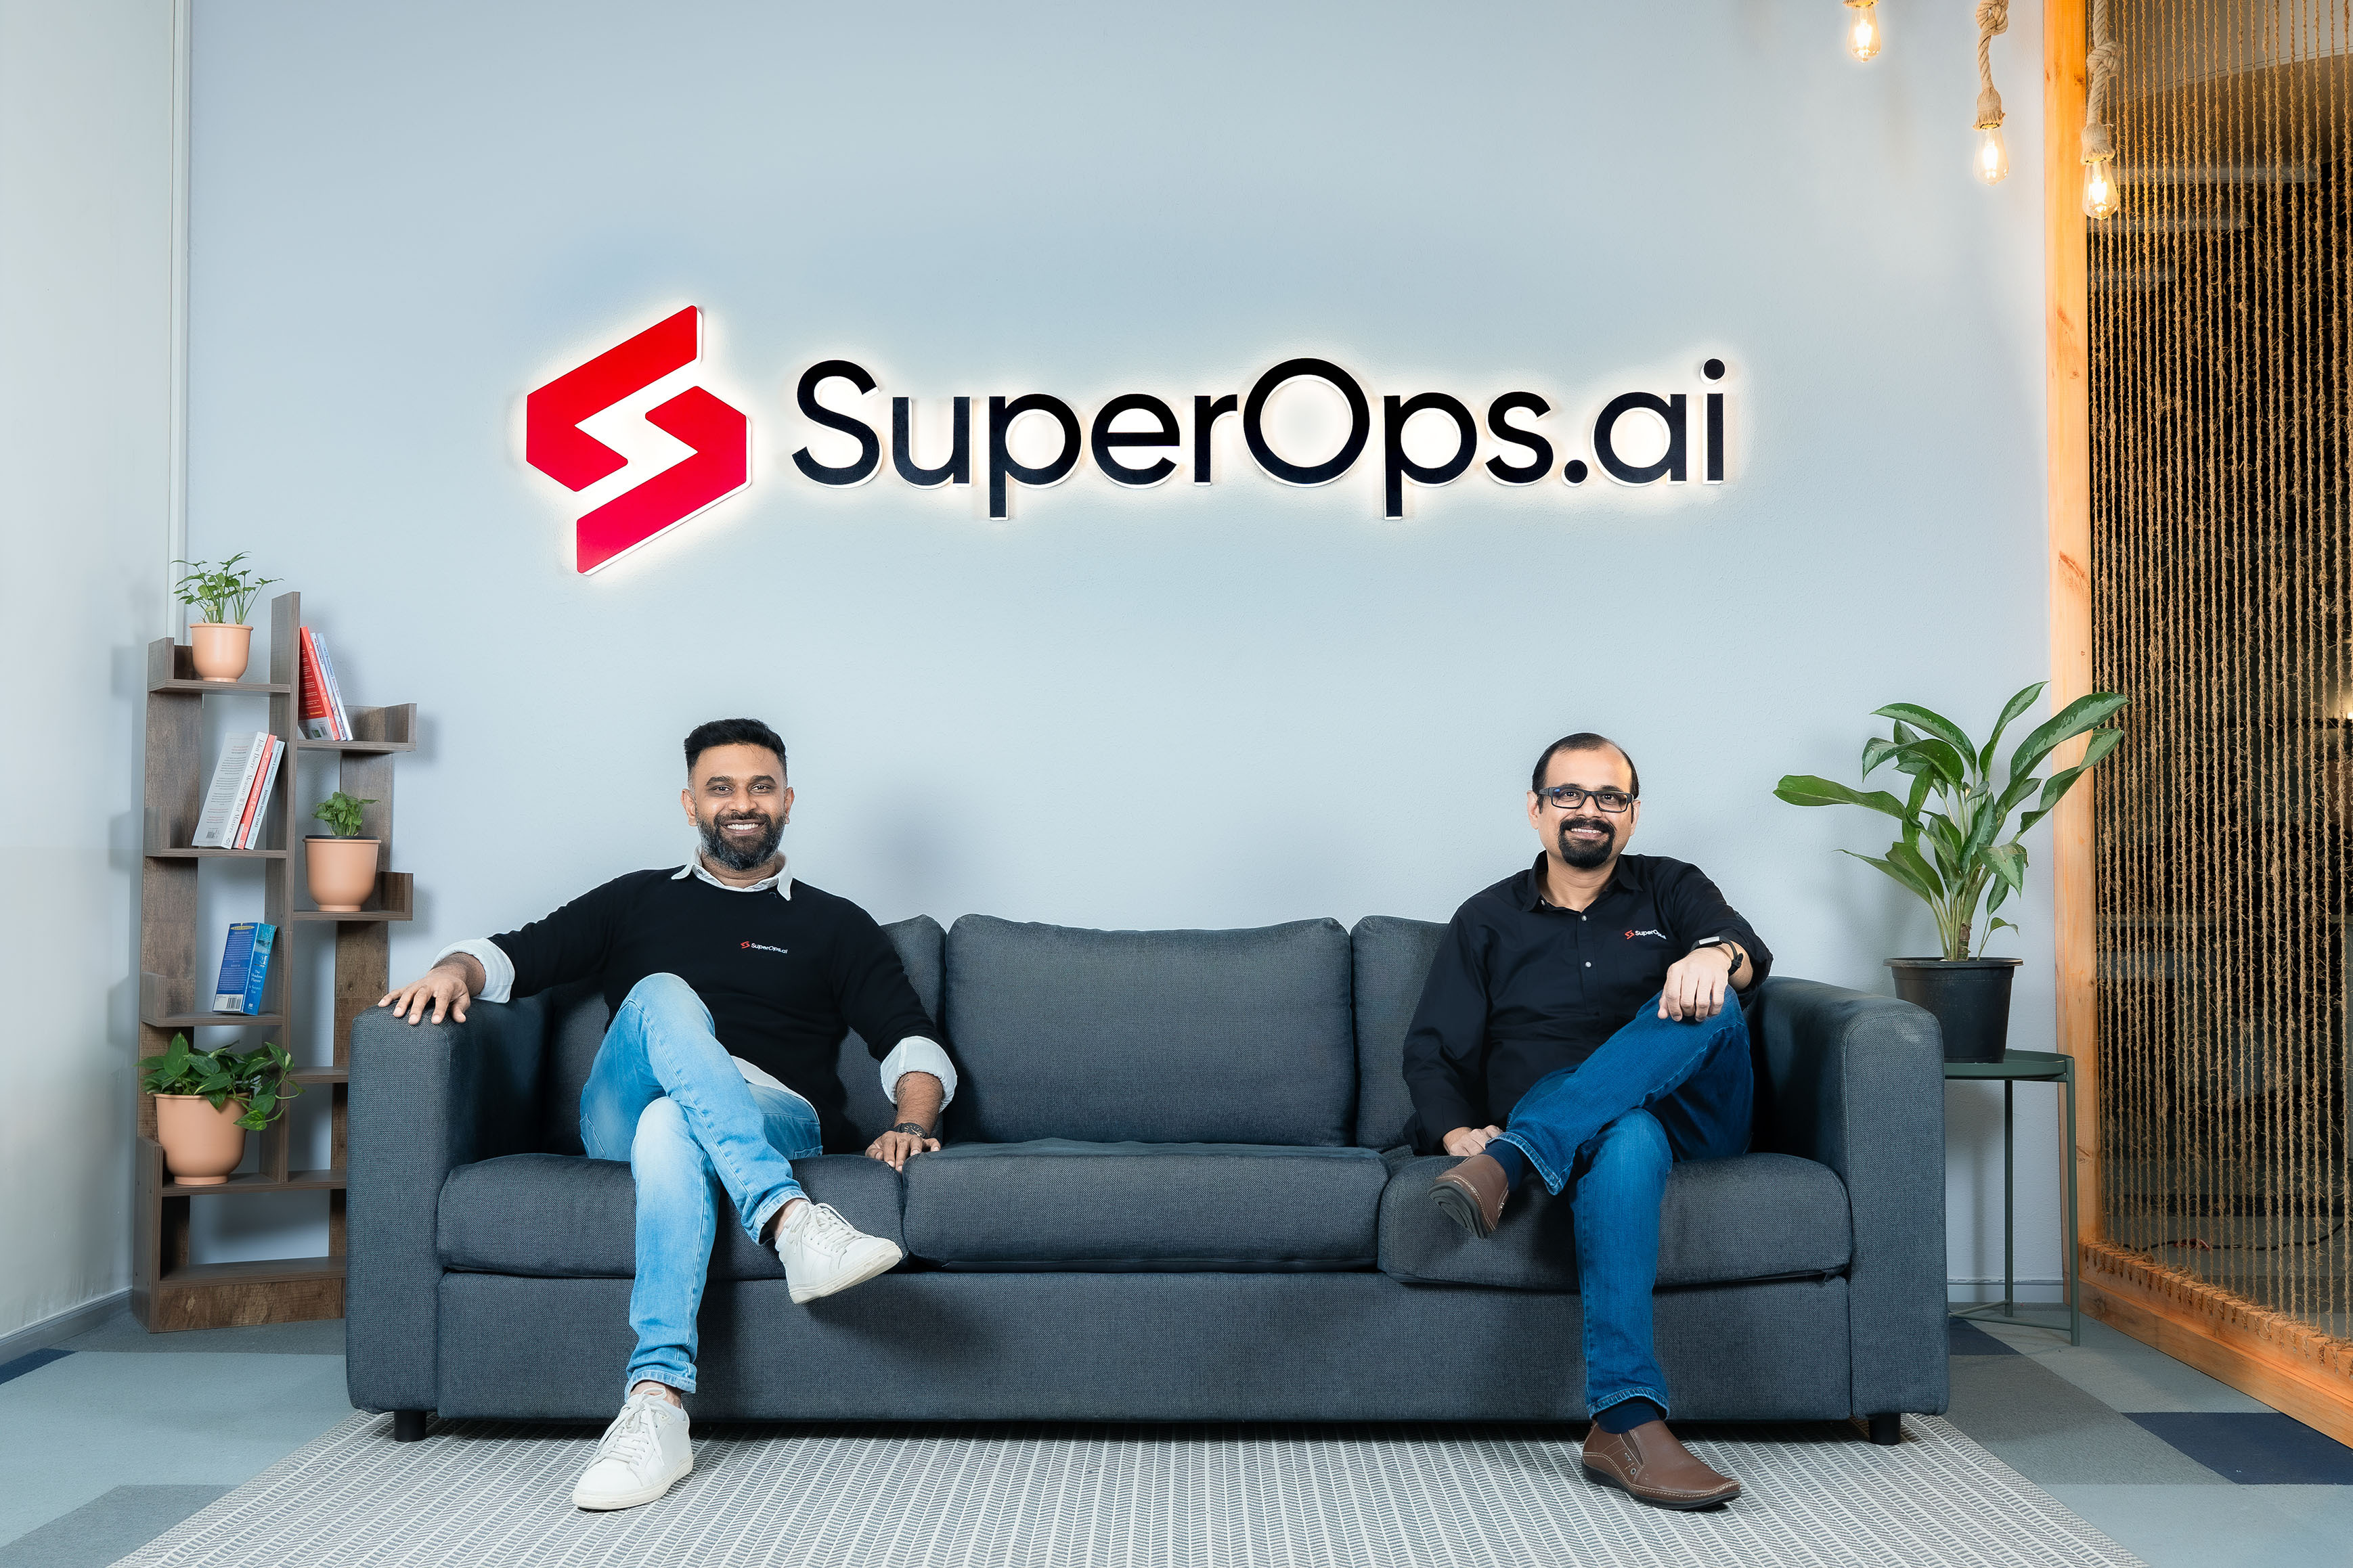 SuperOps.ai founders: (L to R) Arvind Parthiban and Jaykumar Karumbasalam.